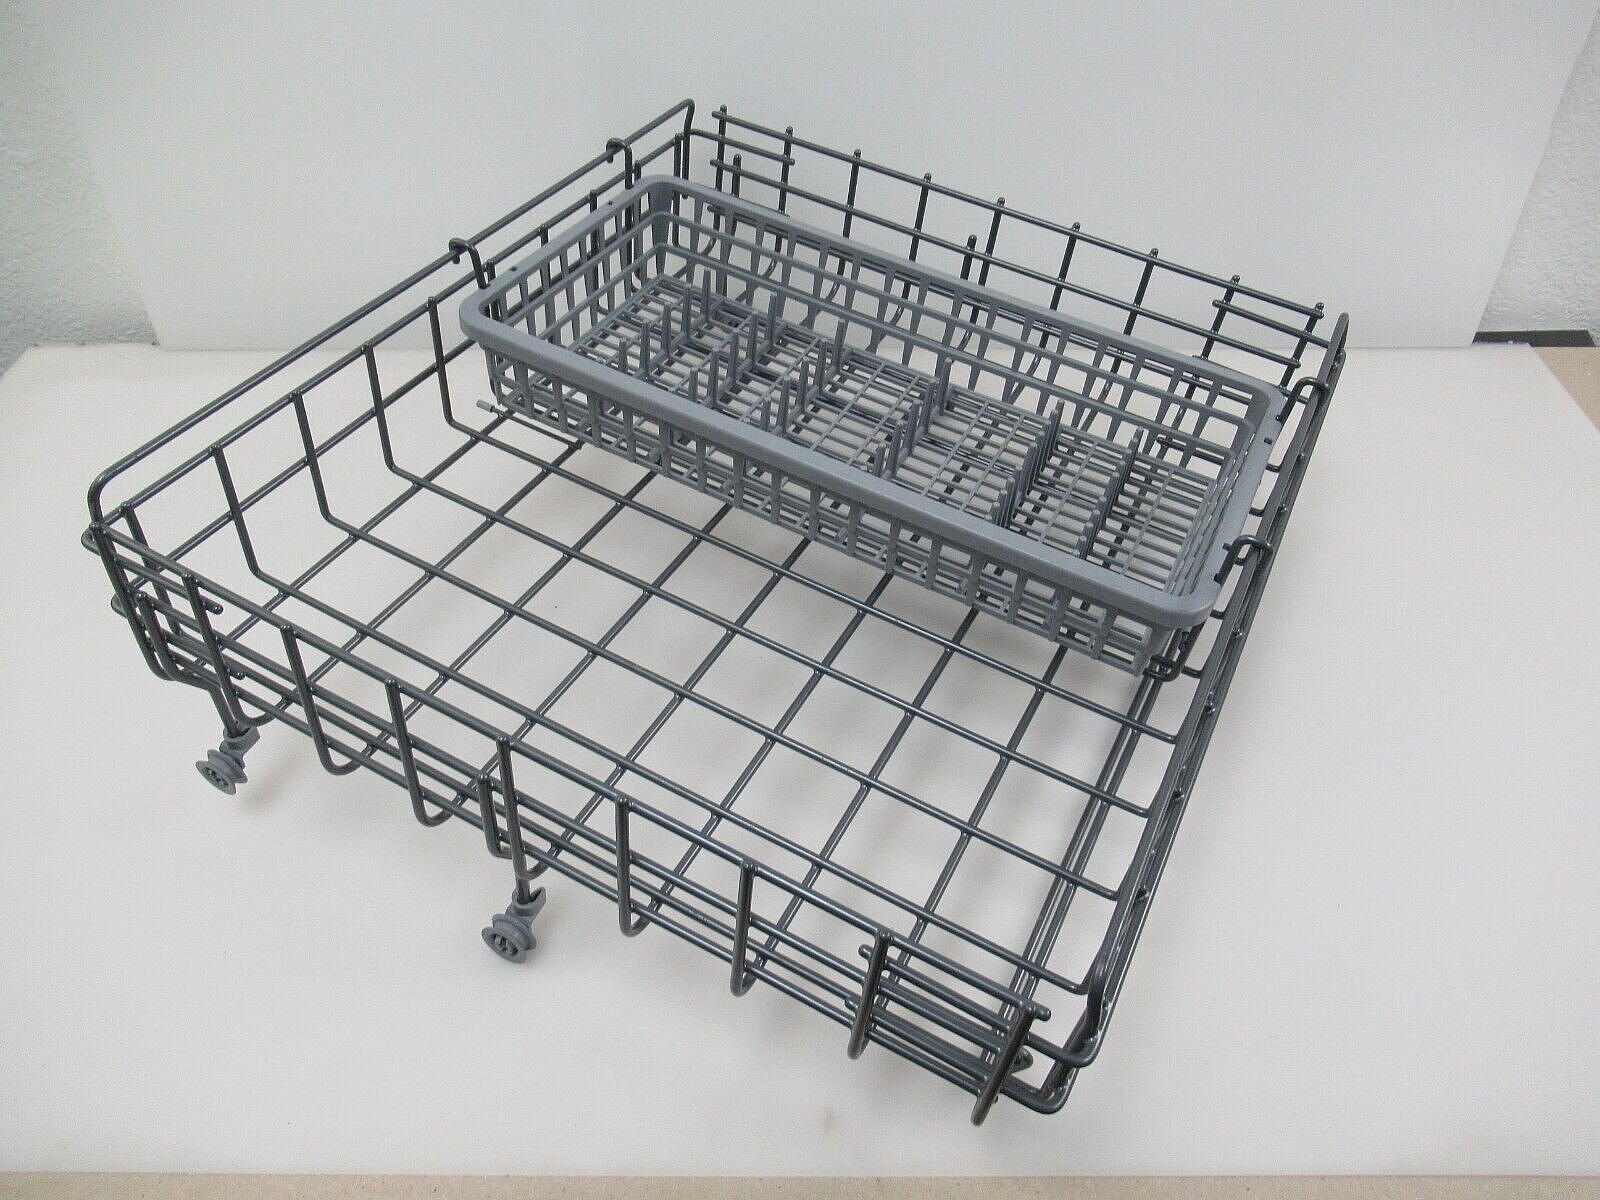 ASKO Dishwasher Upper Rack & Basket for Heavy Cutlerys  8076637-36, 8076639-77 - $191.95